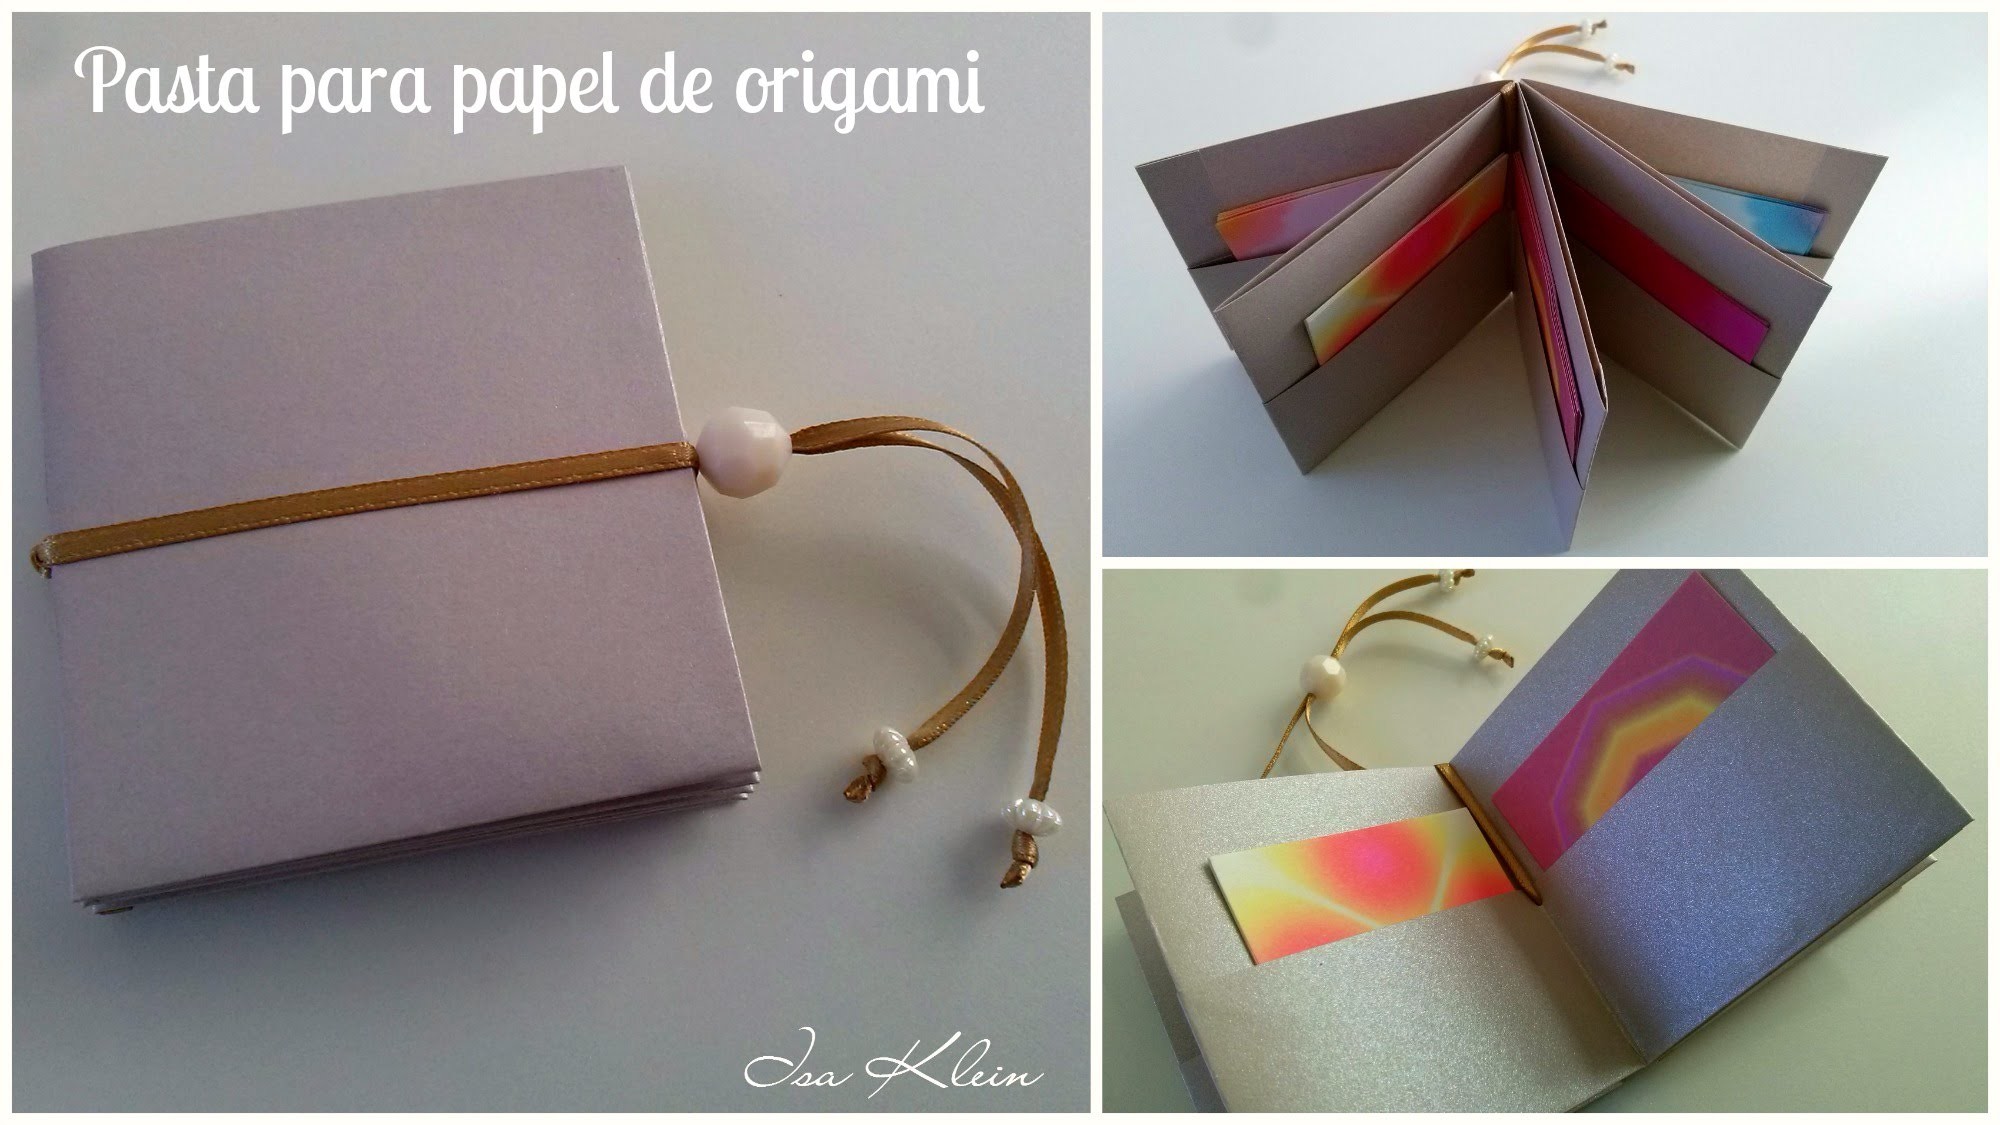 Pasta para papel de origami